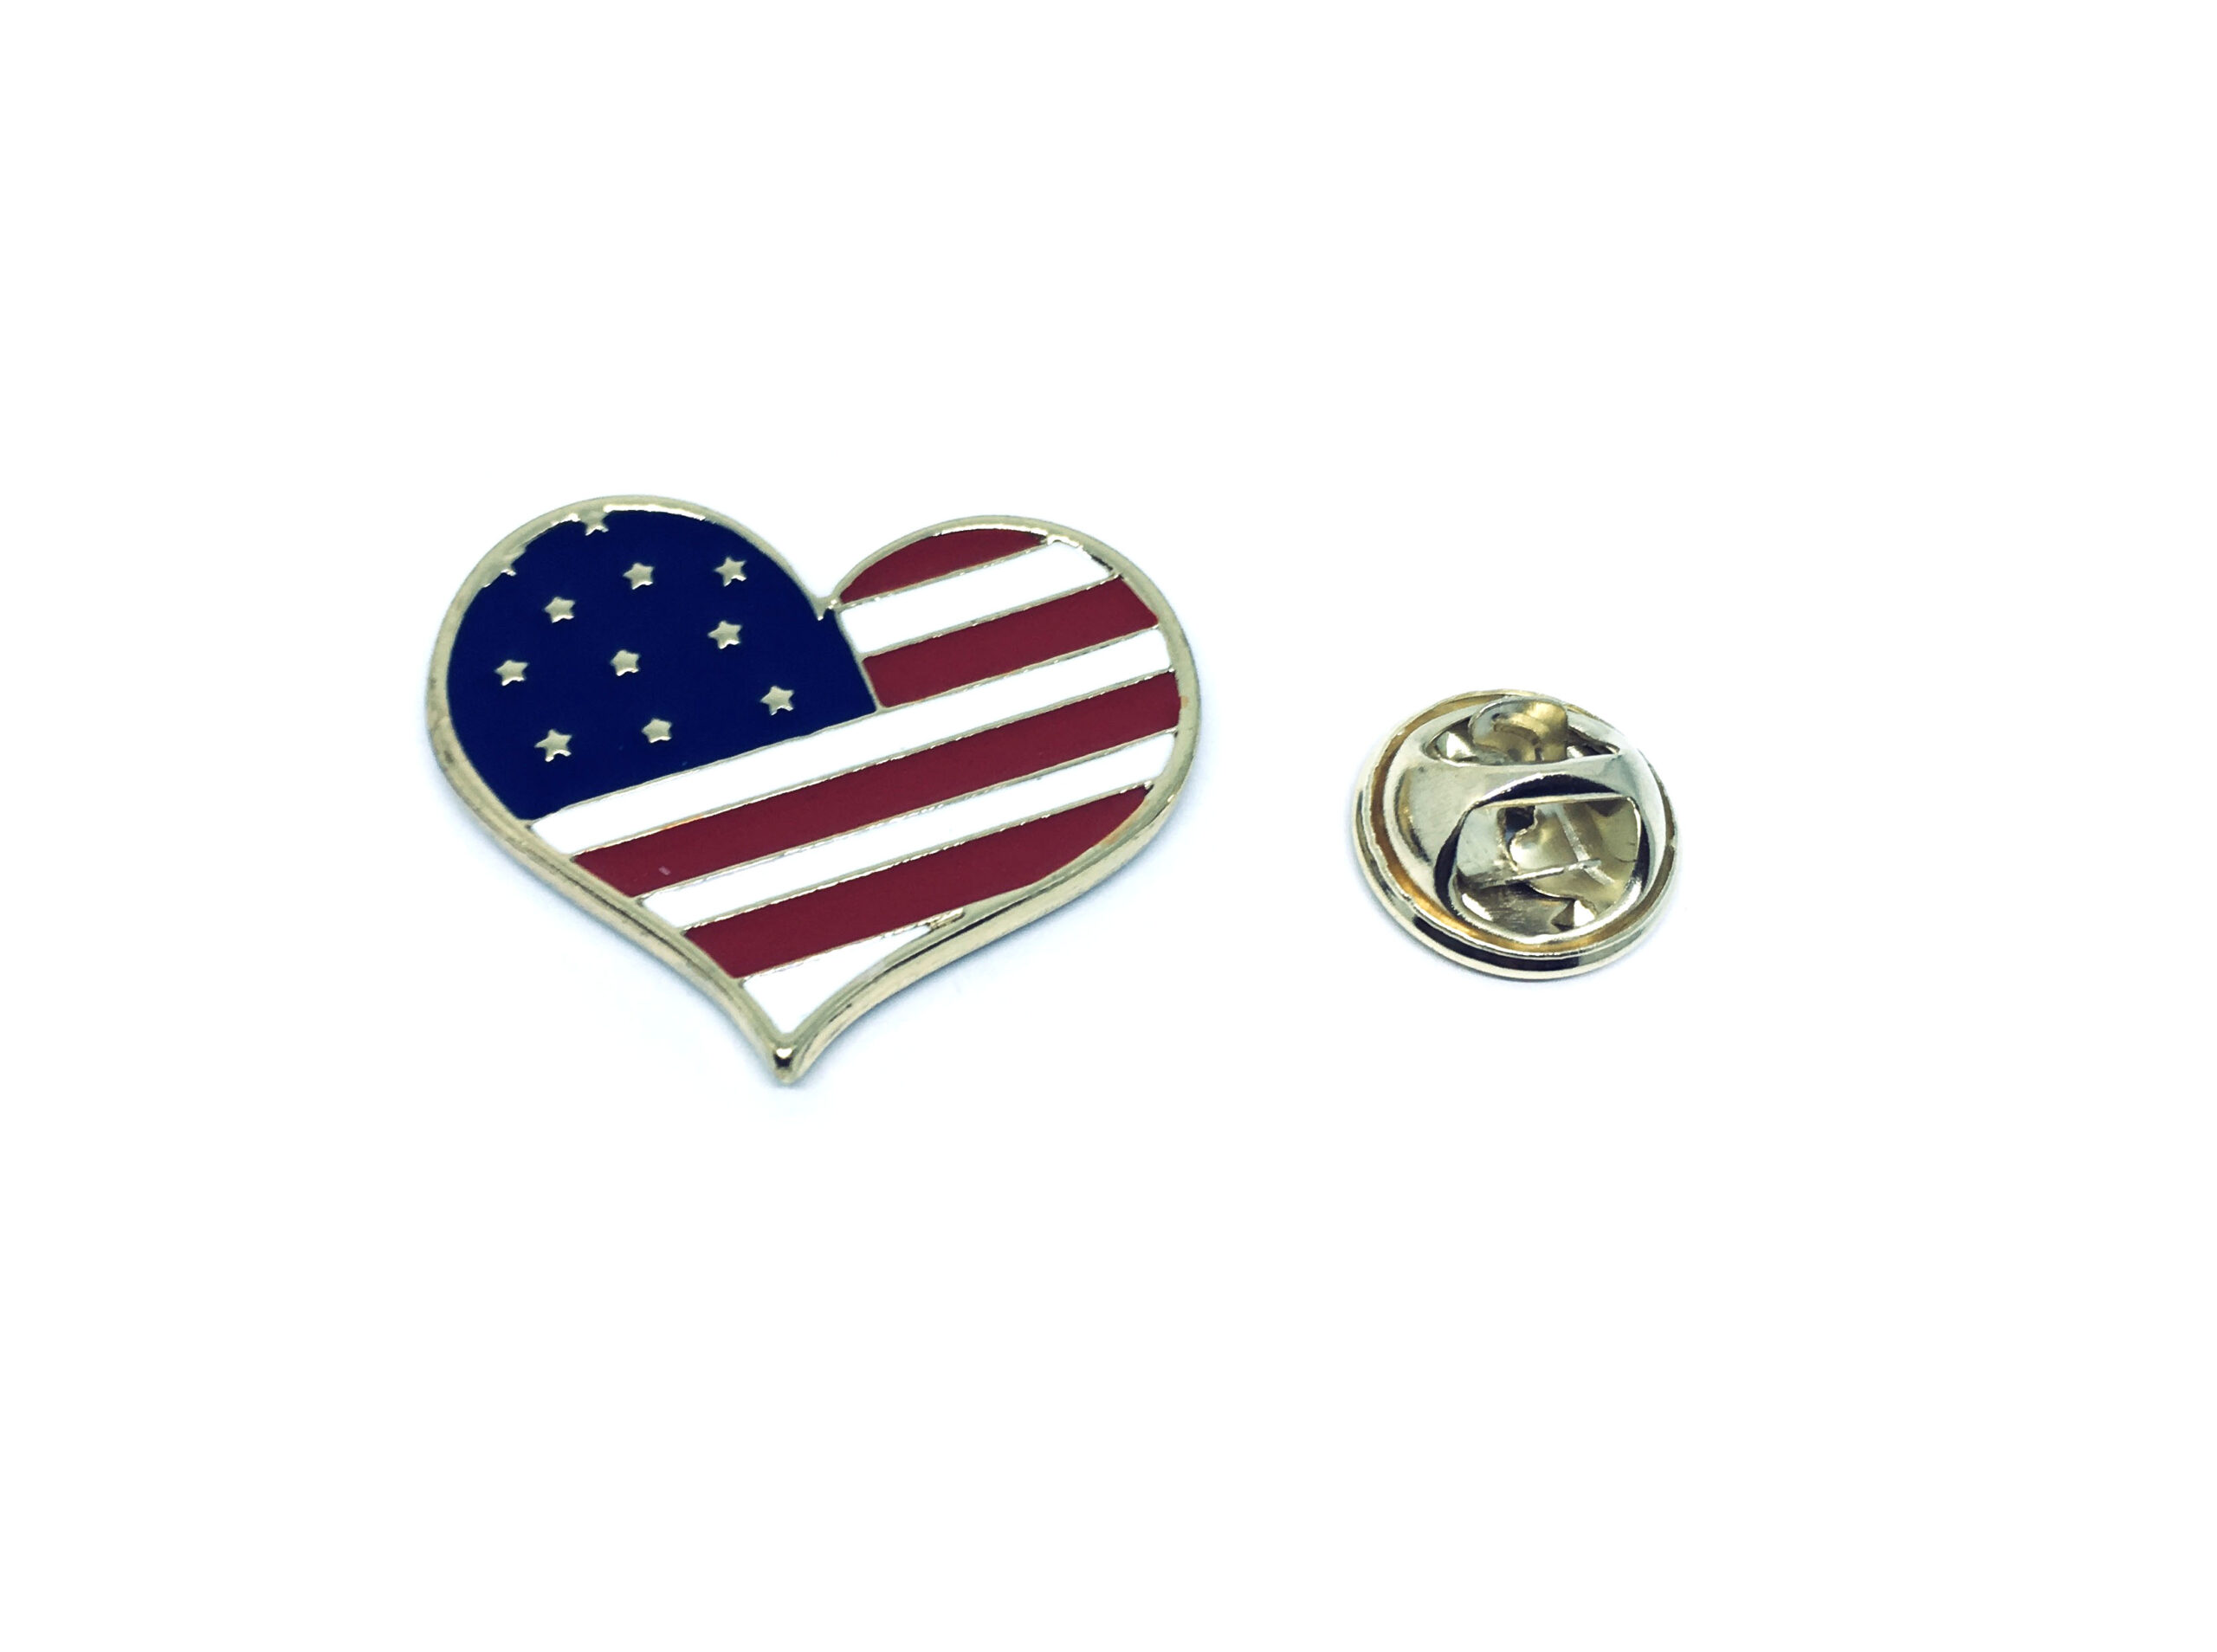 Heart Shaped USA Flag Pin